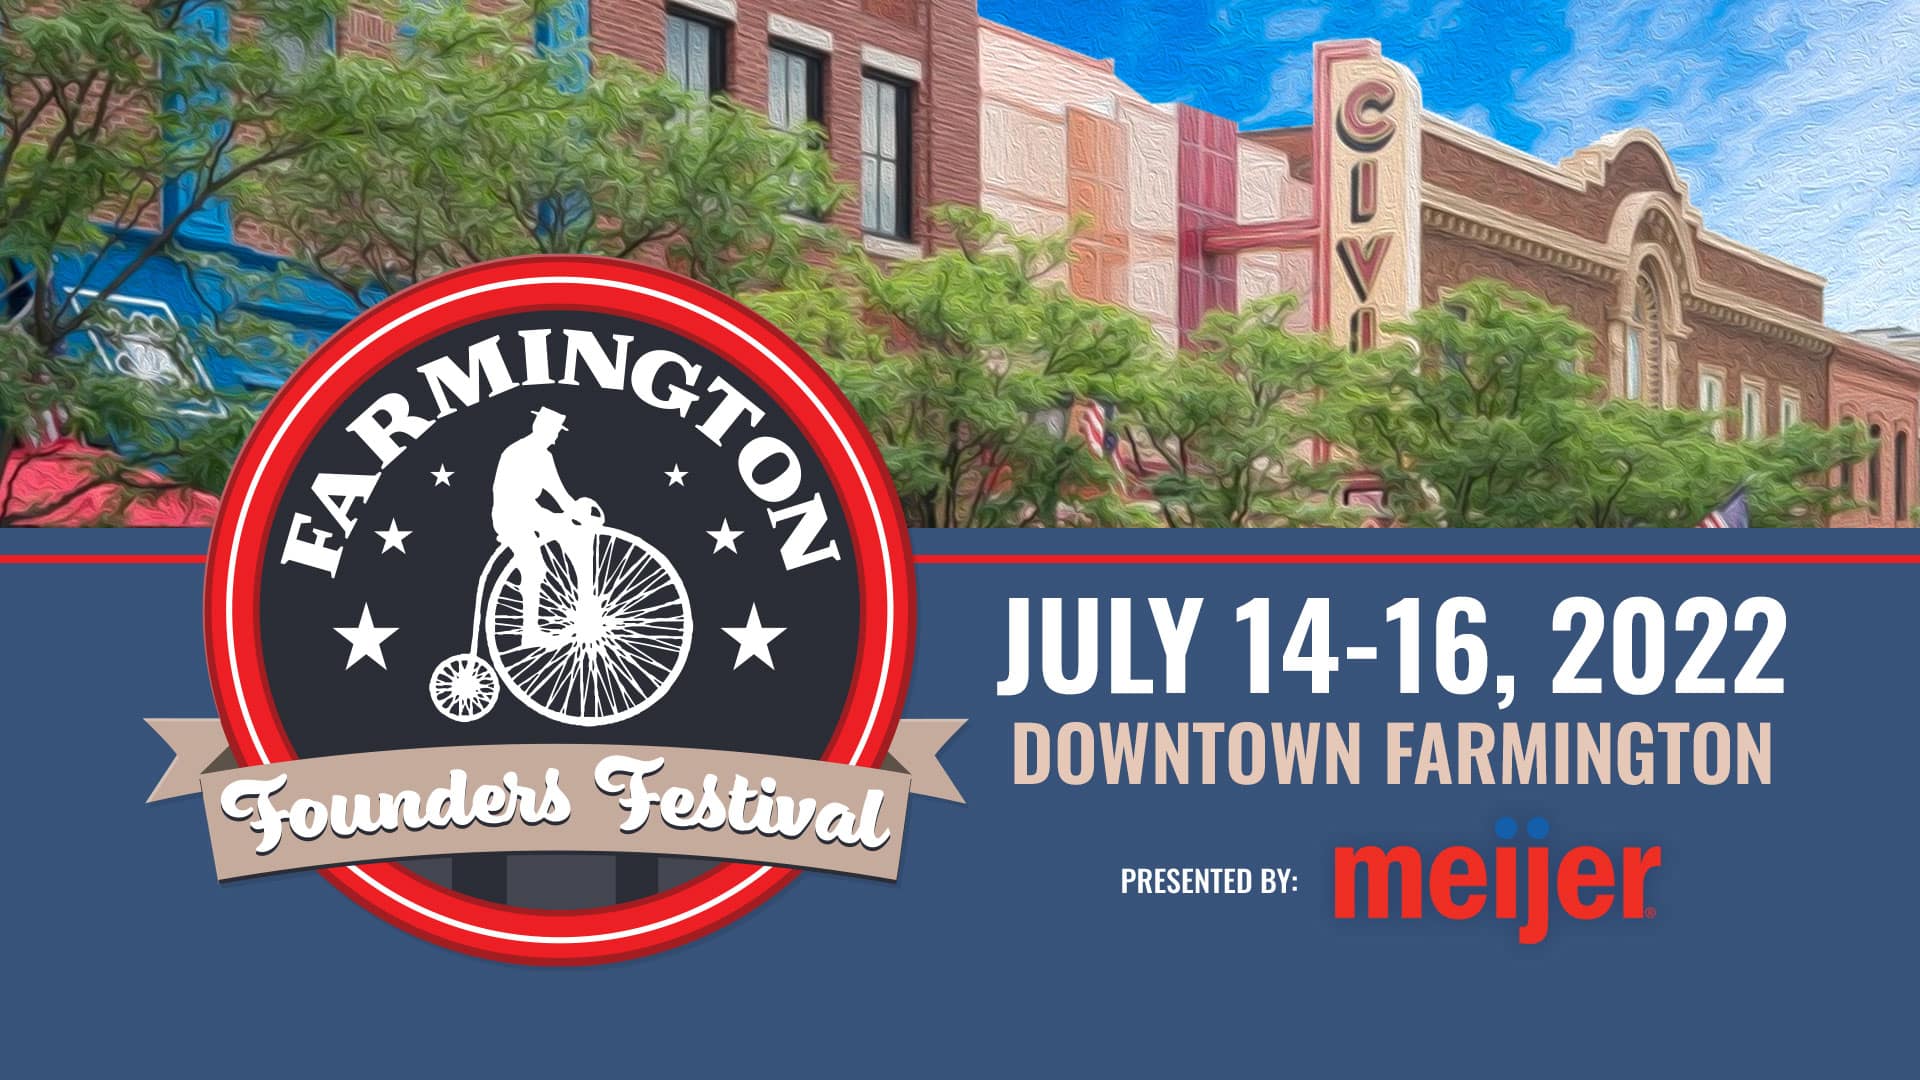 Farmington Founders Festival; July 14-16, 2022 downtown Farmington; presented by Meijer